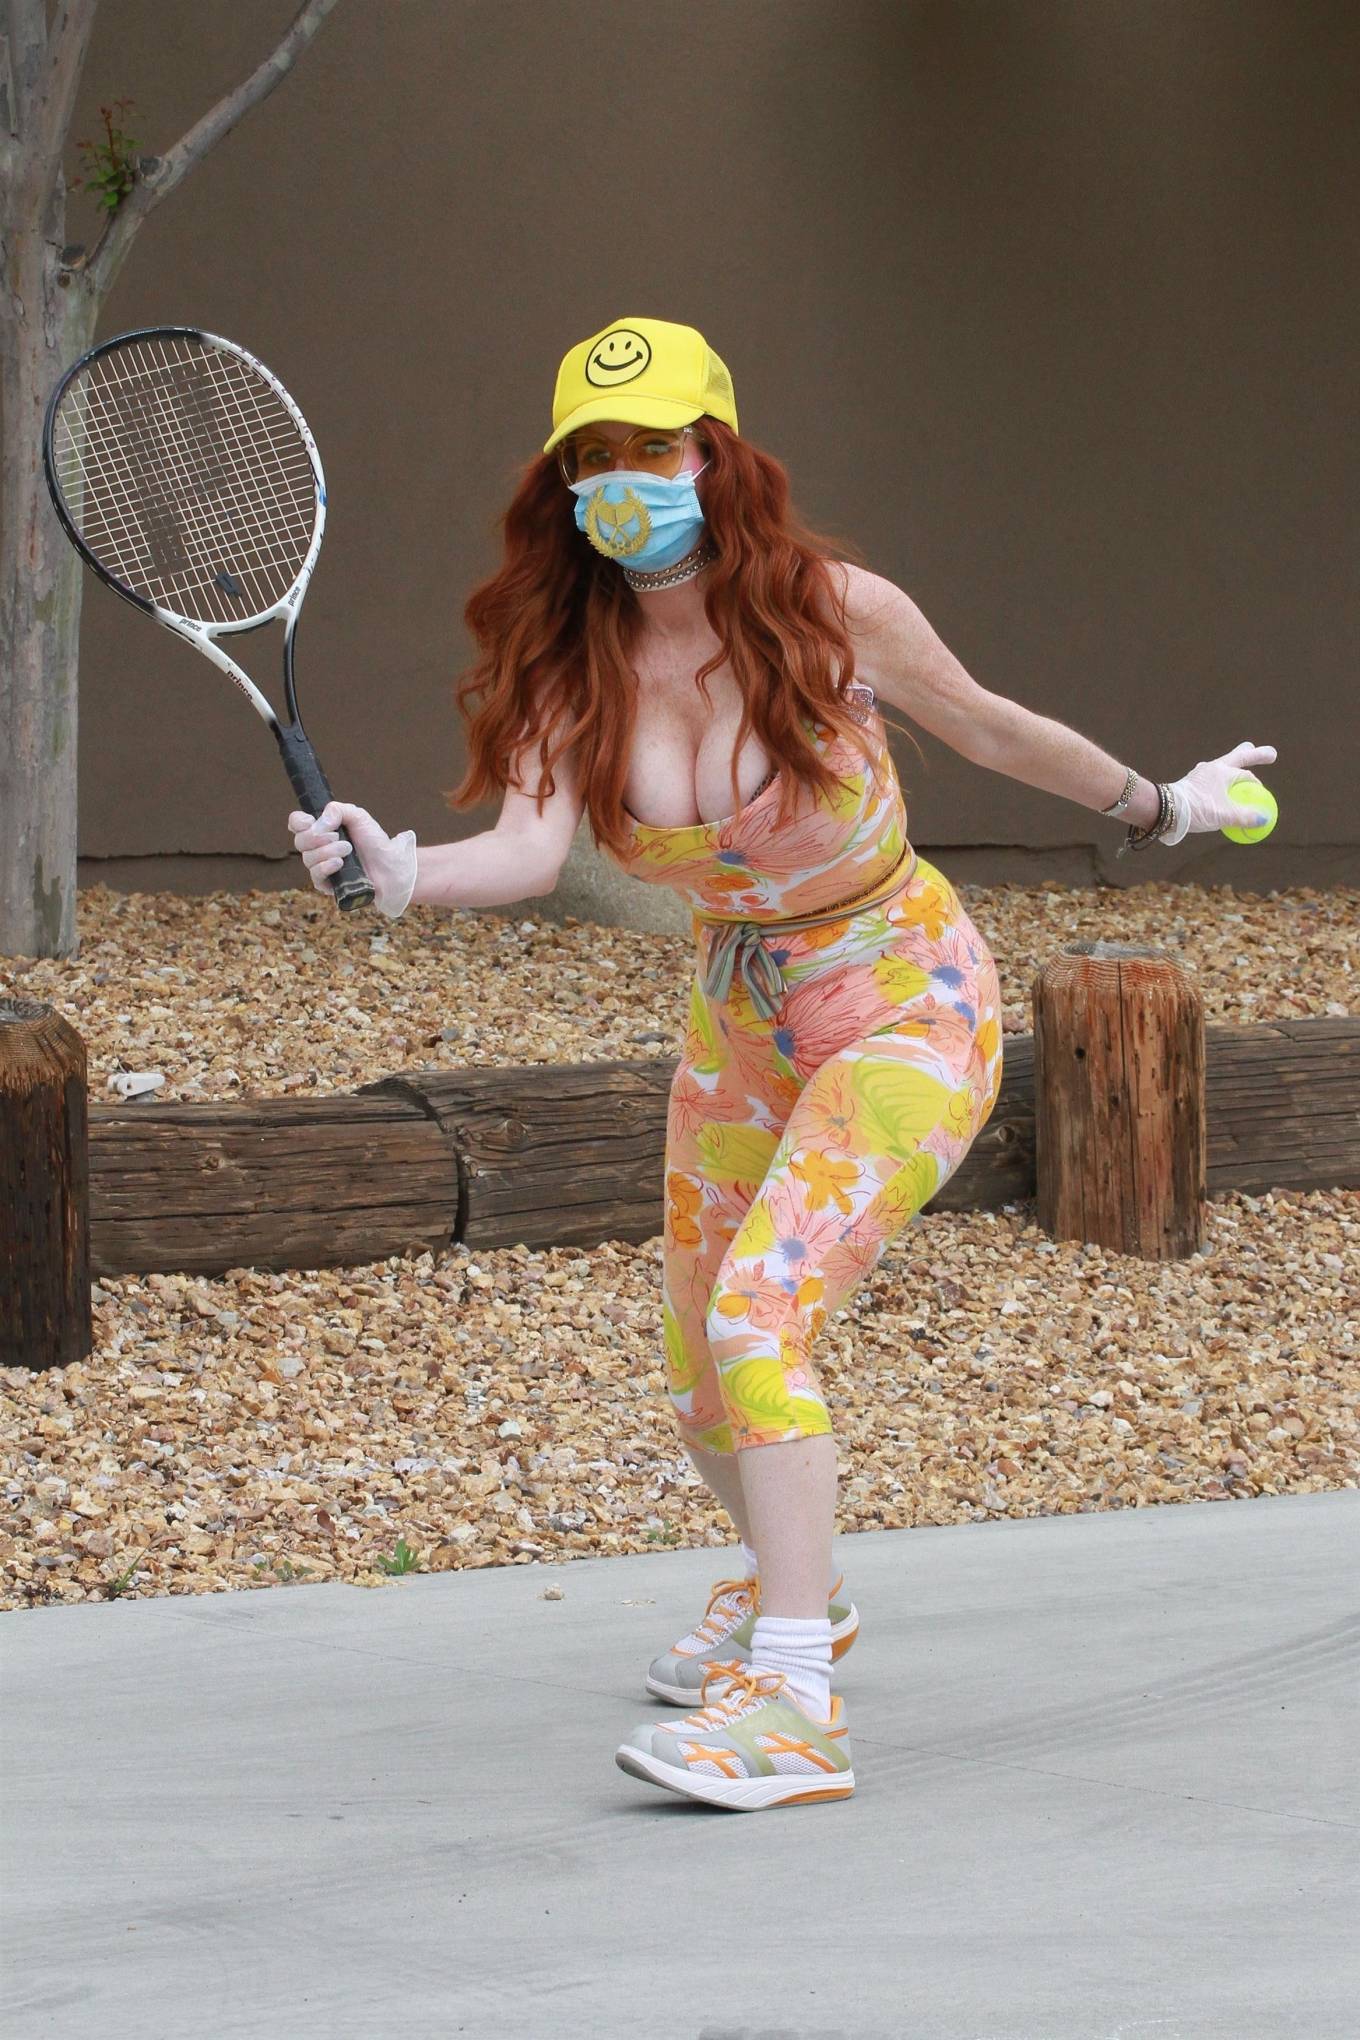 Phoebe Price â€“ Tennis photoshoot during Quarantine